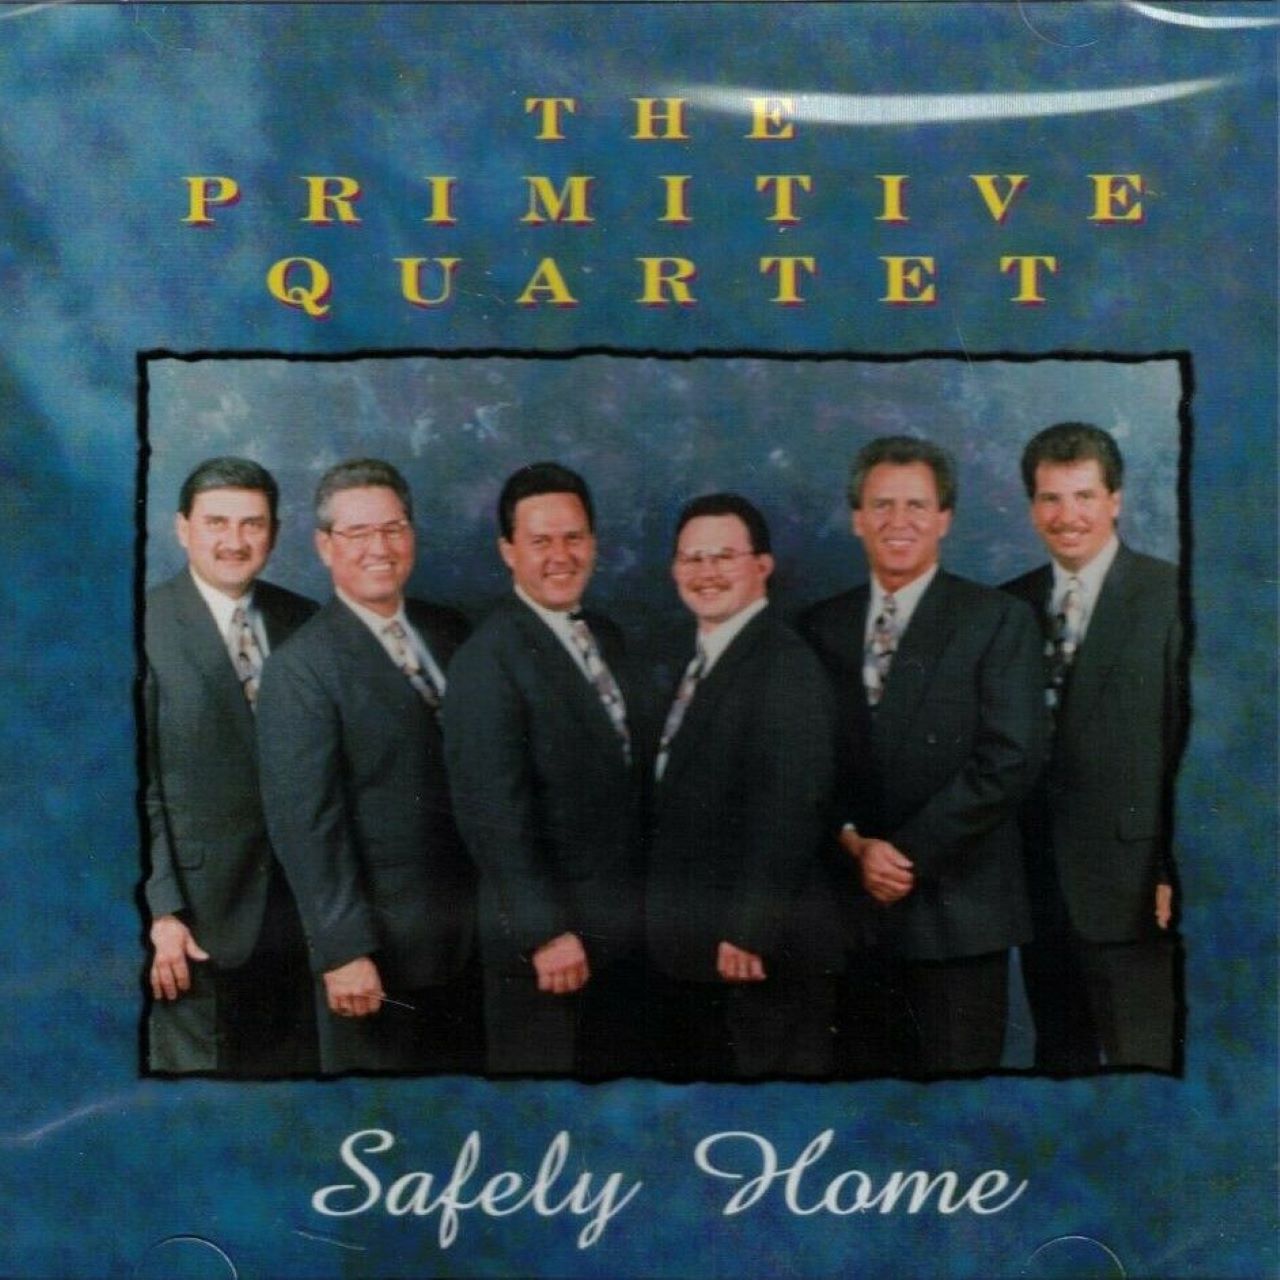 Primitive Quartet - Safely Home cover album